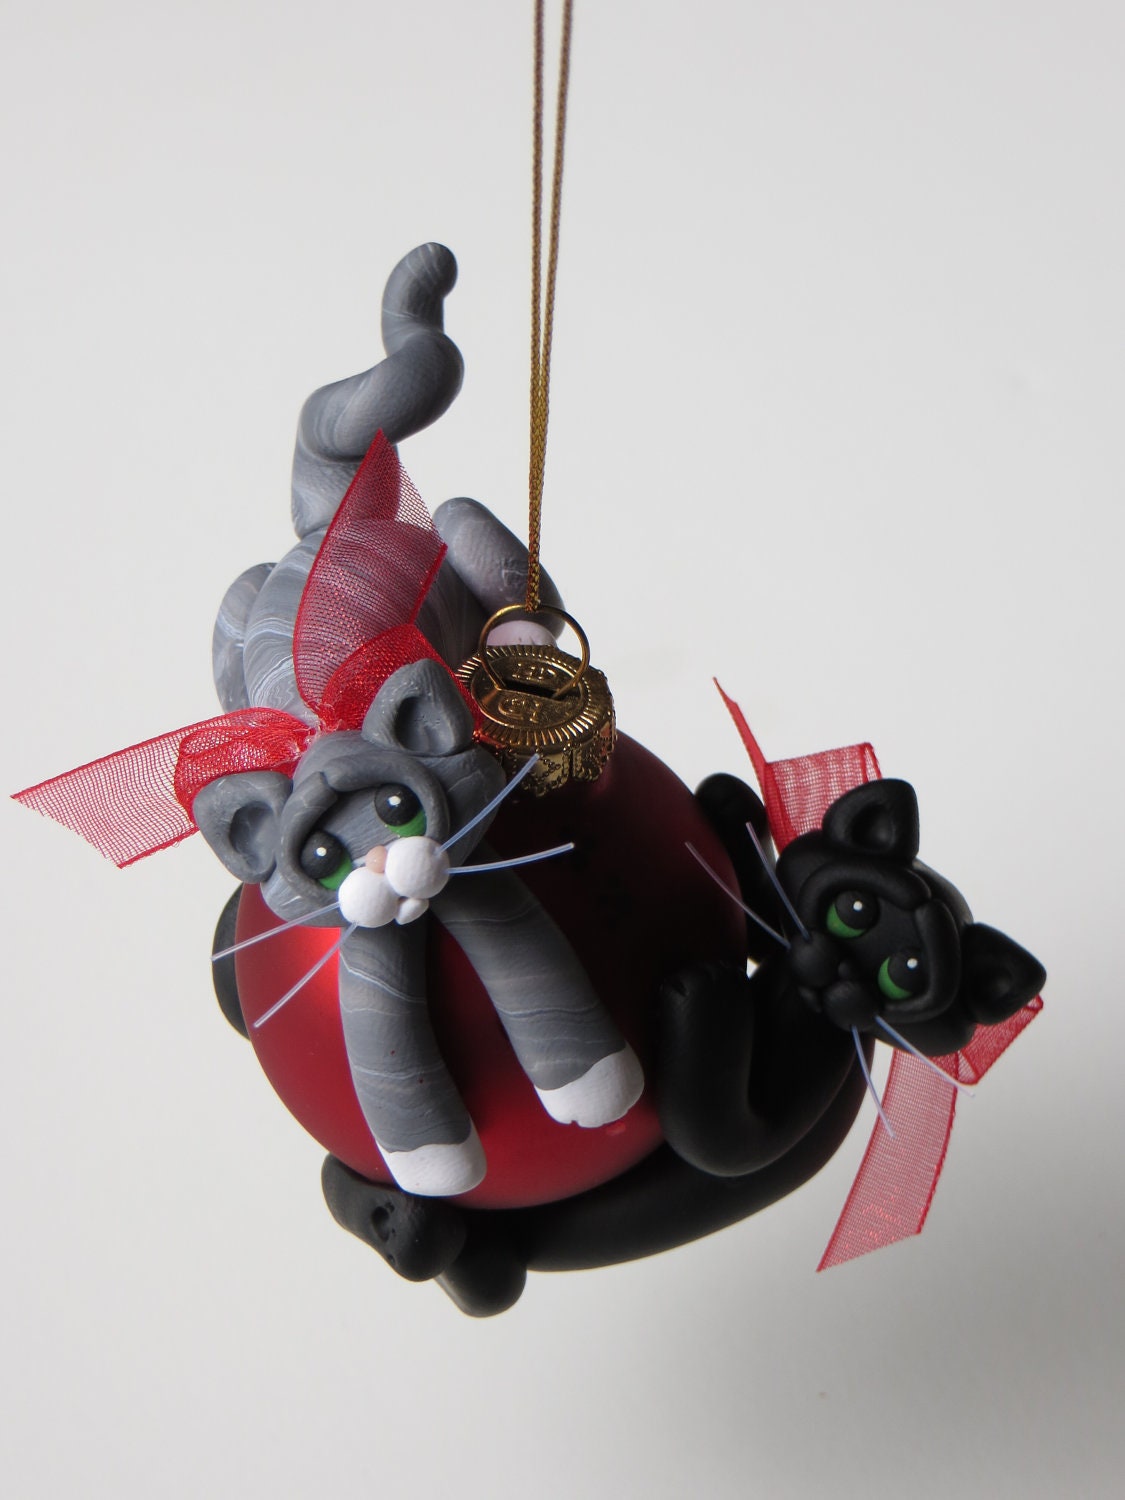 55 HQ Photos Black Cat Christmas Ornament / Black Cat Christmas Ornament Figurine Polymer Clay Art